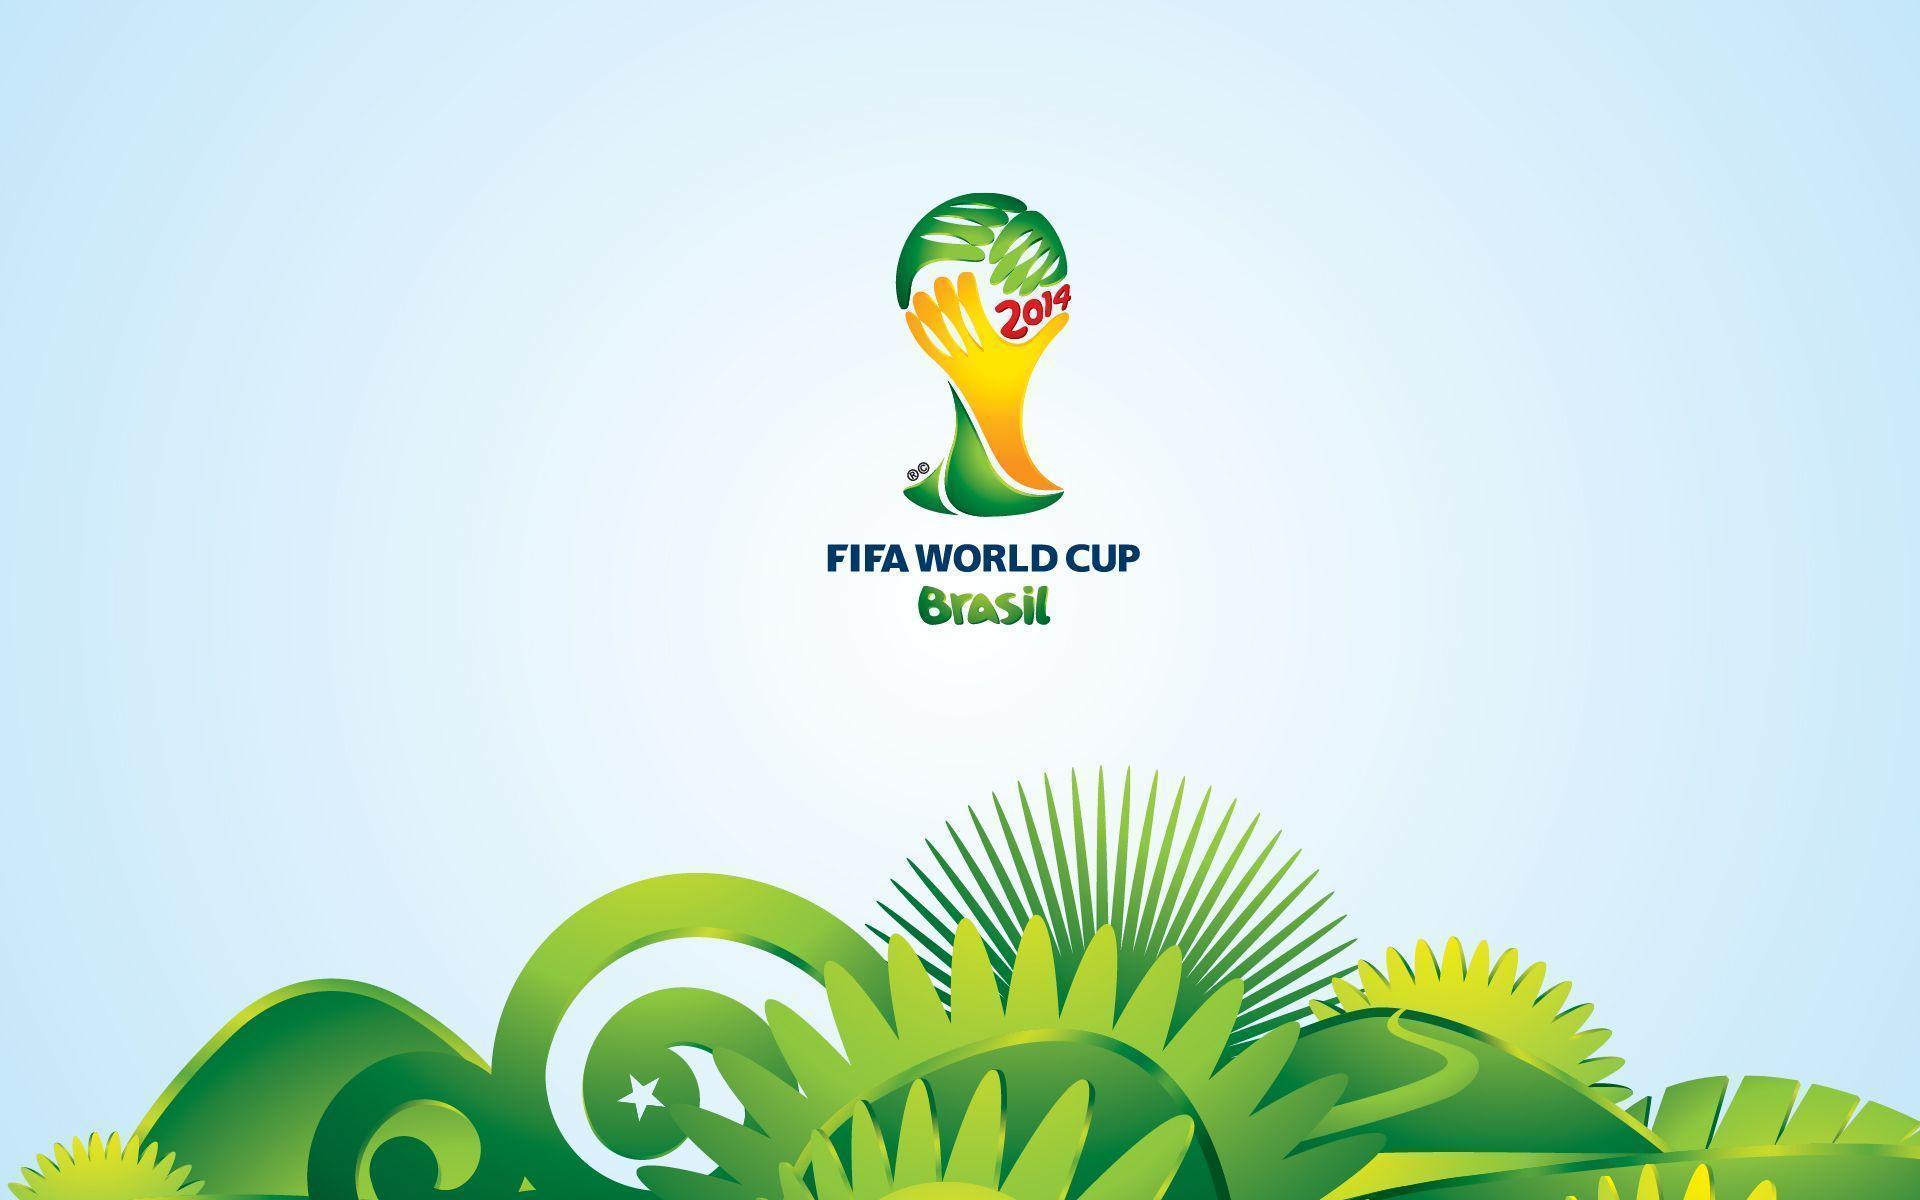 FIFA World Cup 2014 Wallpaper